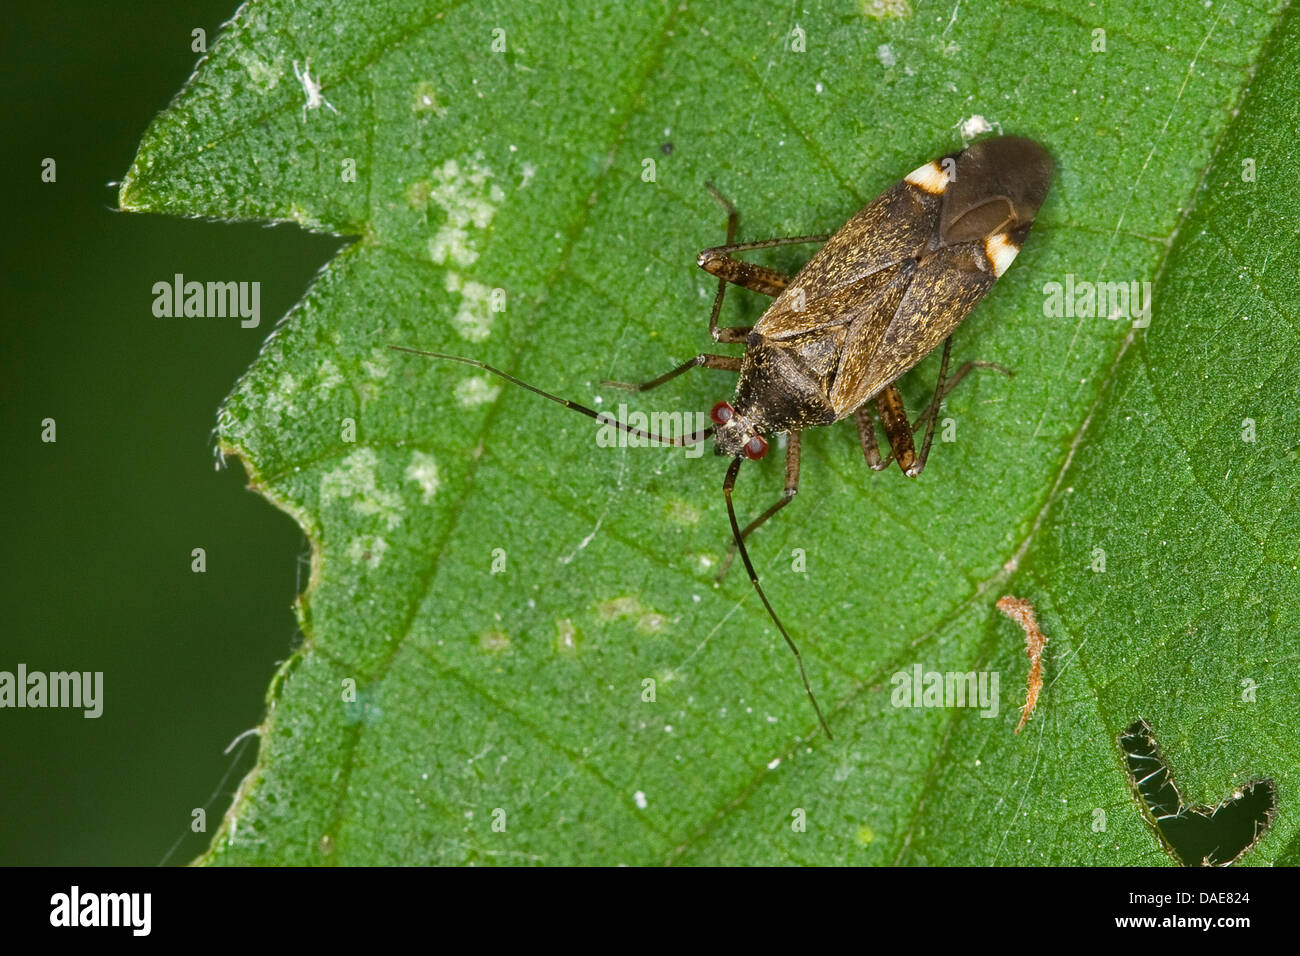 Capsid bugs (Closterotomus fulvomaculatus), sitting on stinging nettle leaf, Germany Stock Photo